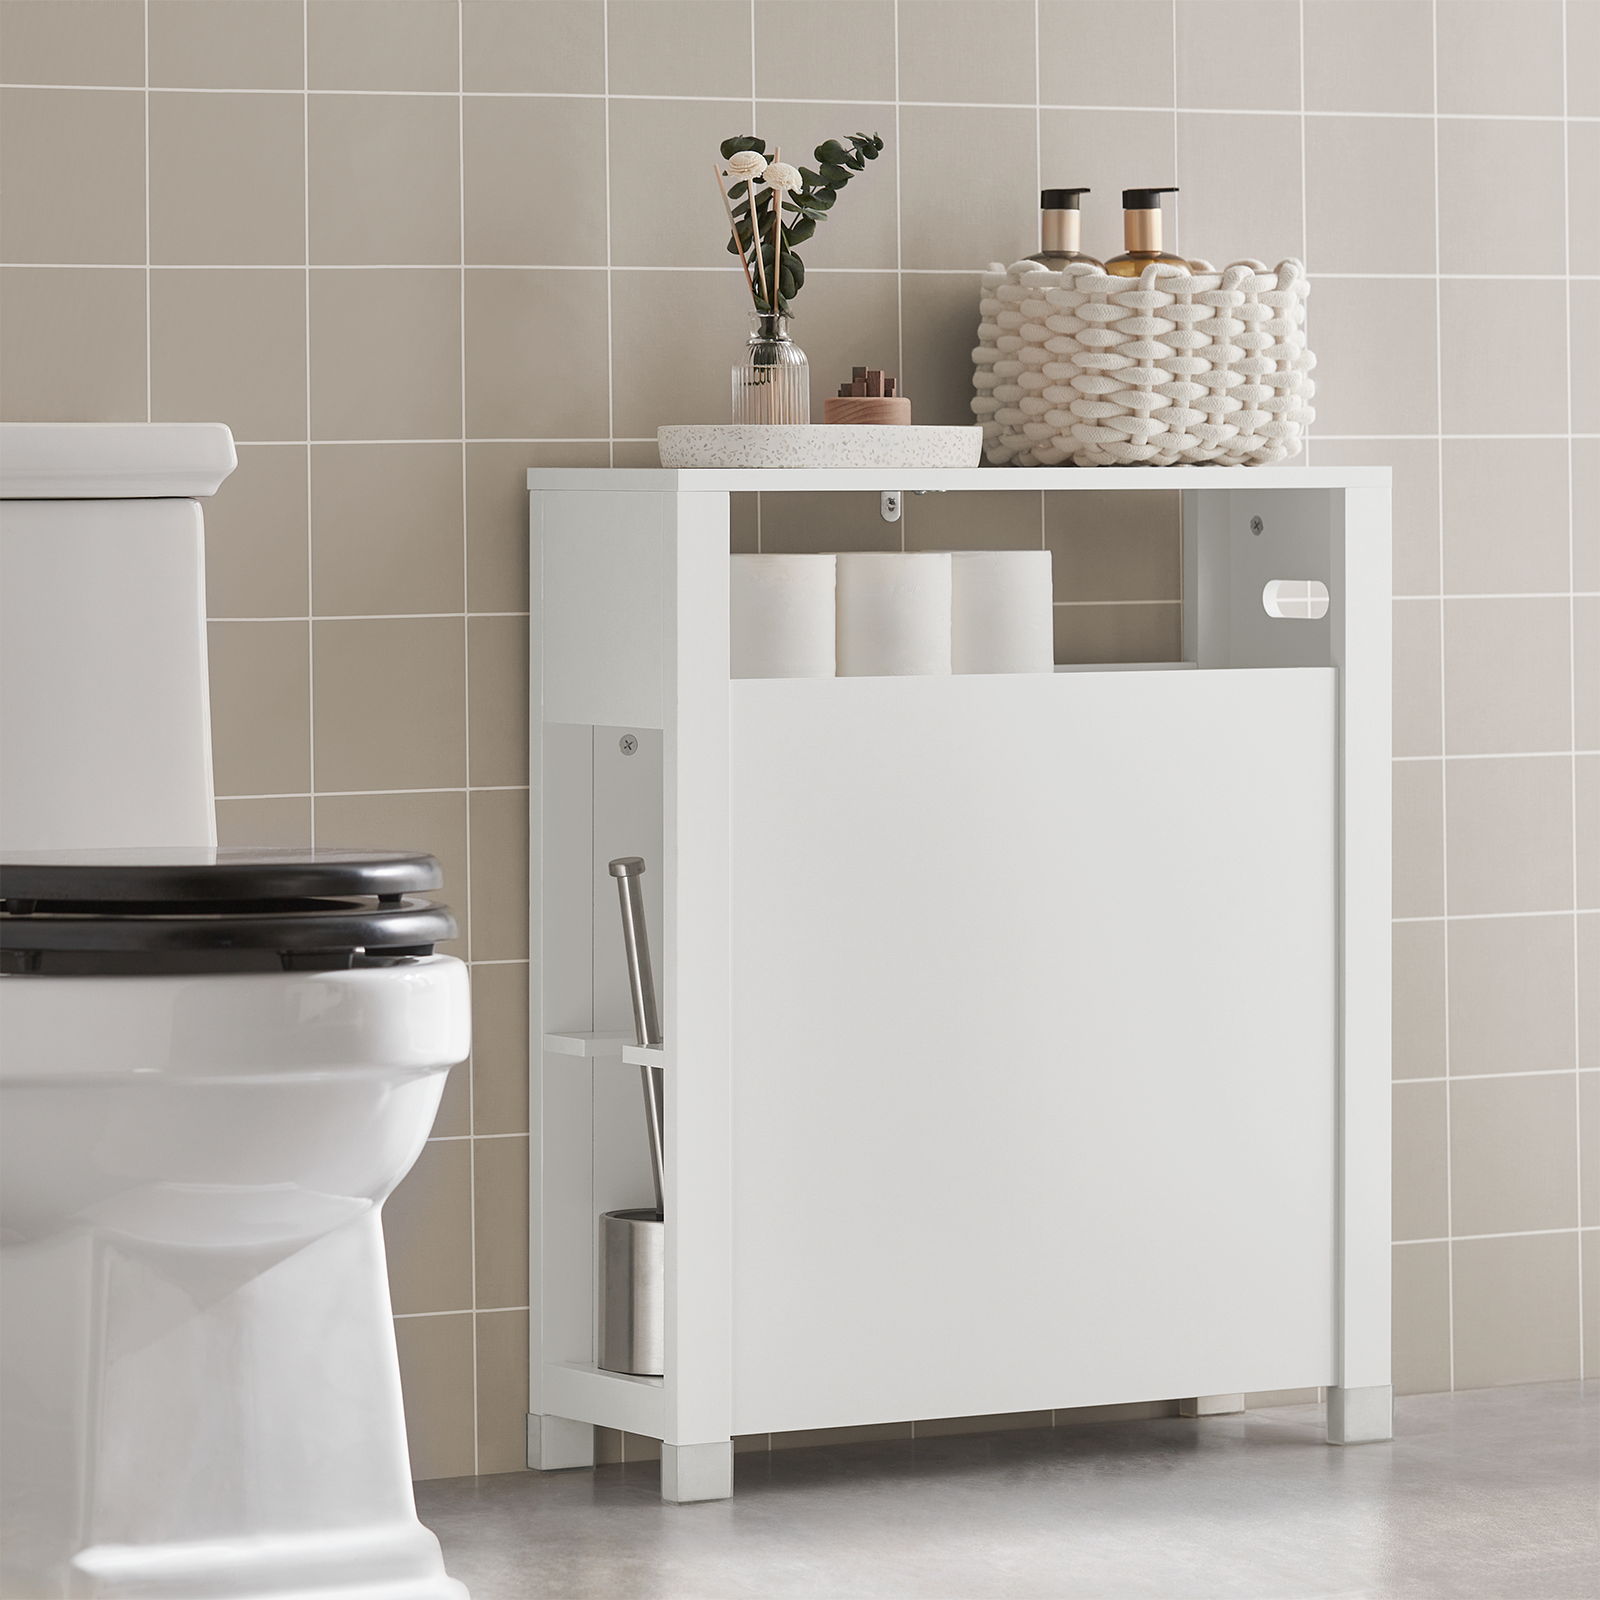 SoBuy BZR83-W Bathroom Cabinet Storage Cabinet Bathroom Toilet Paper Roll Holder